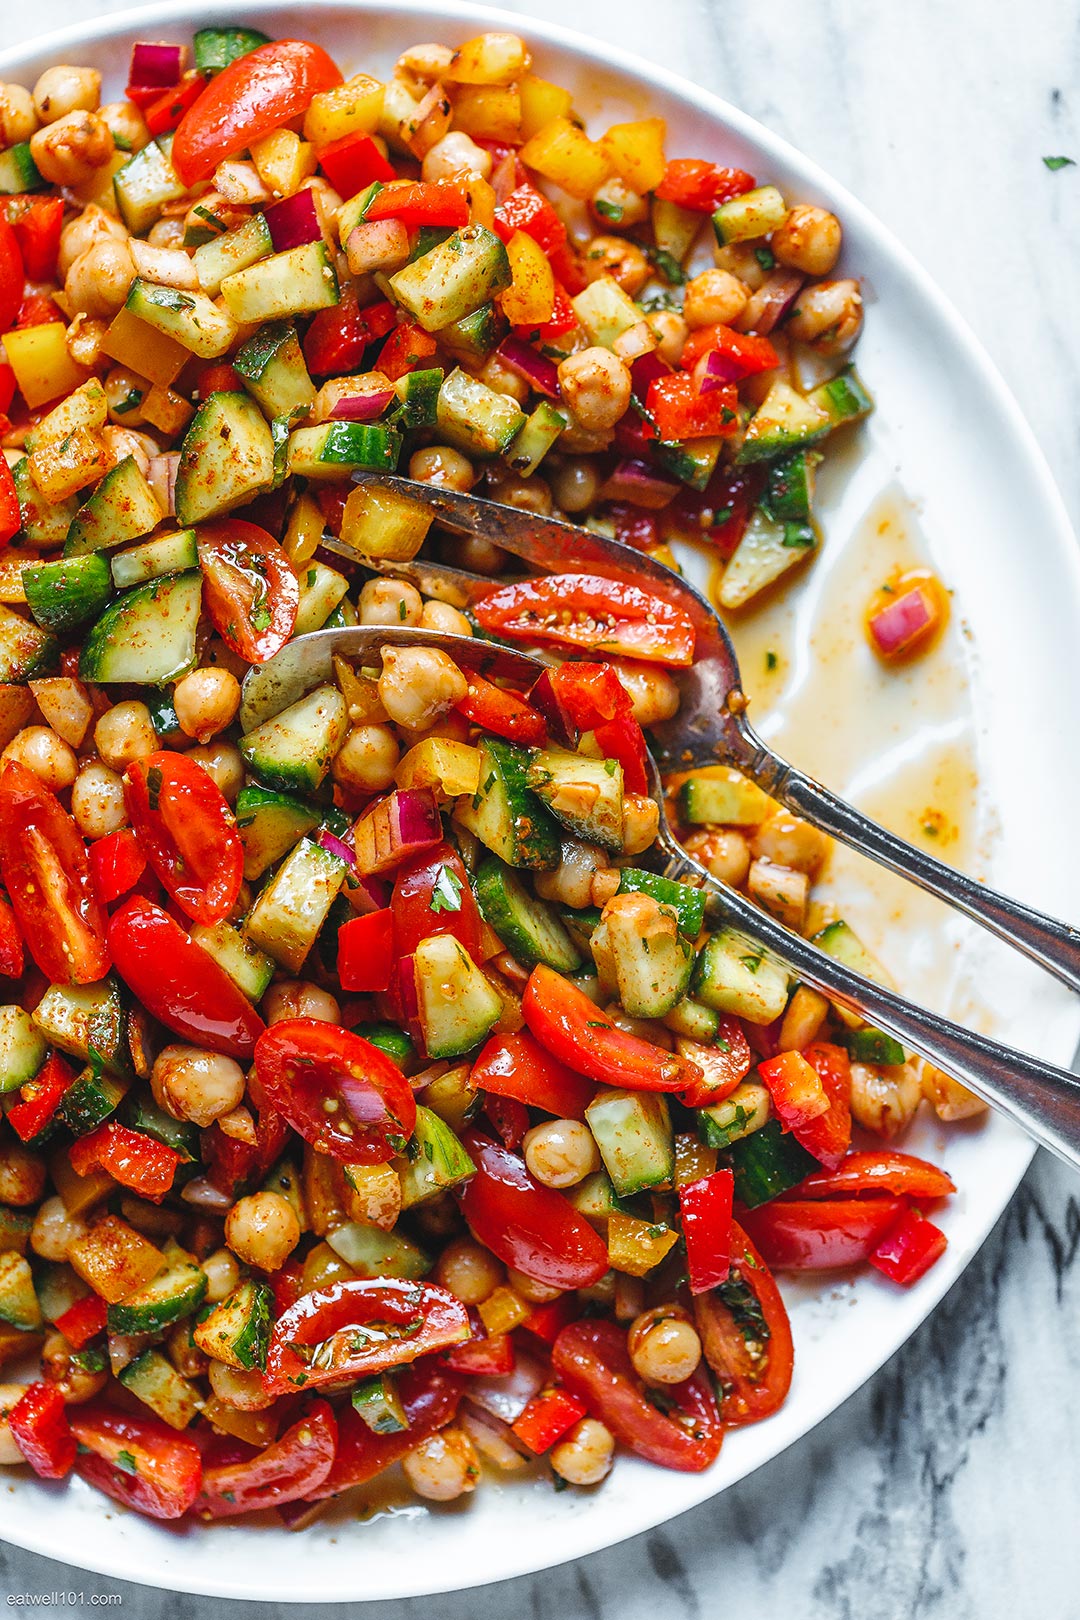 https://www.eatwell101.com/wp-content/uploads/2020/07/Mediterranean-Chickpea-Salad-recipe-1.jpg